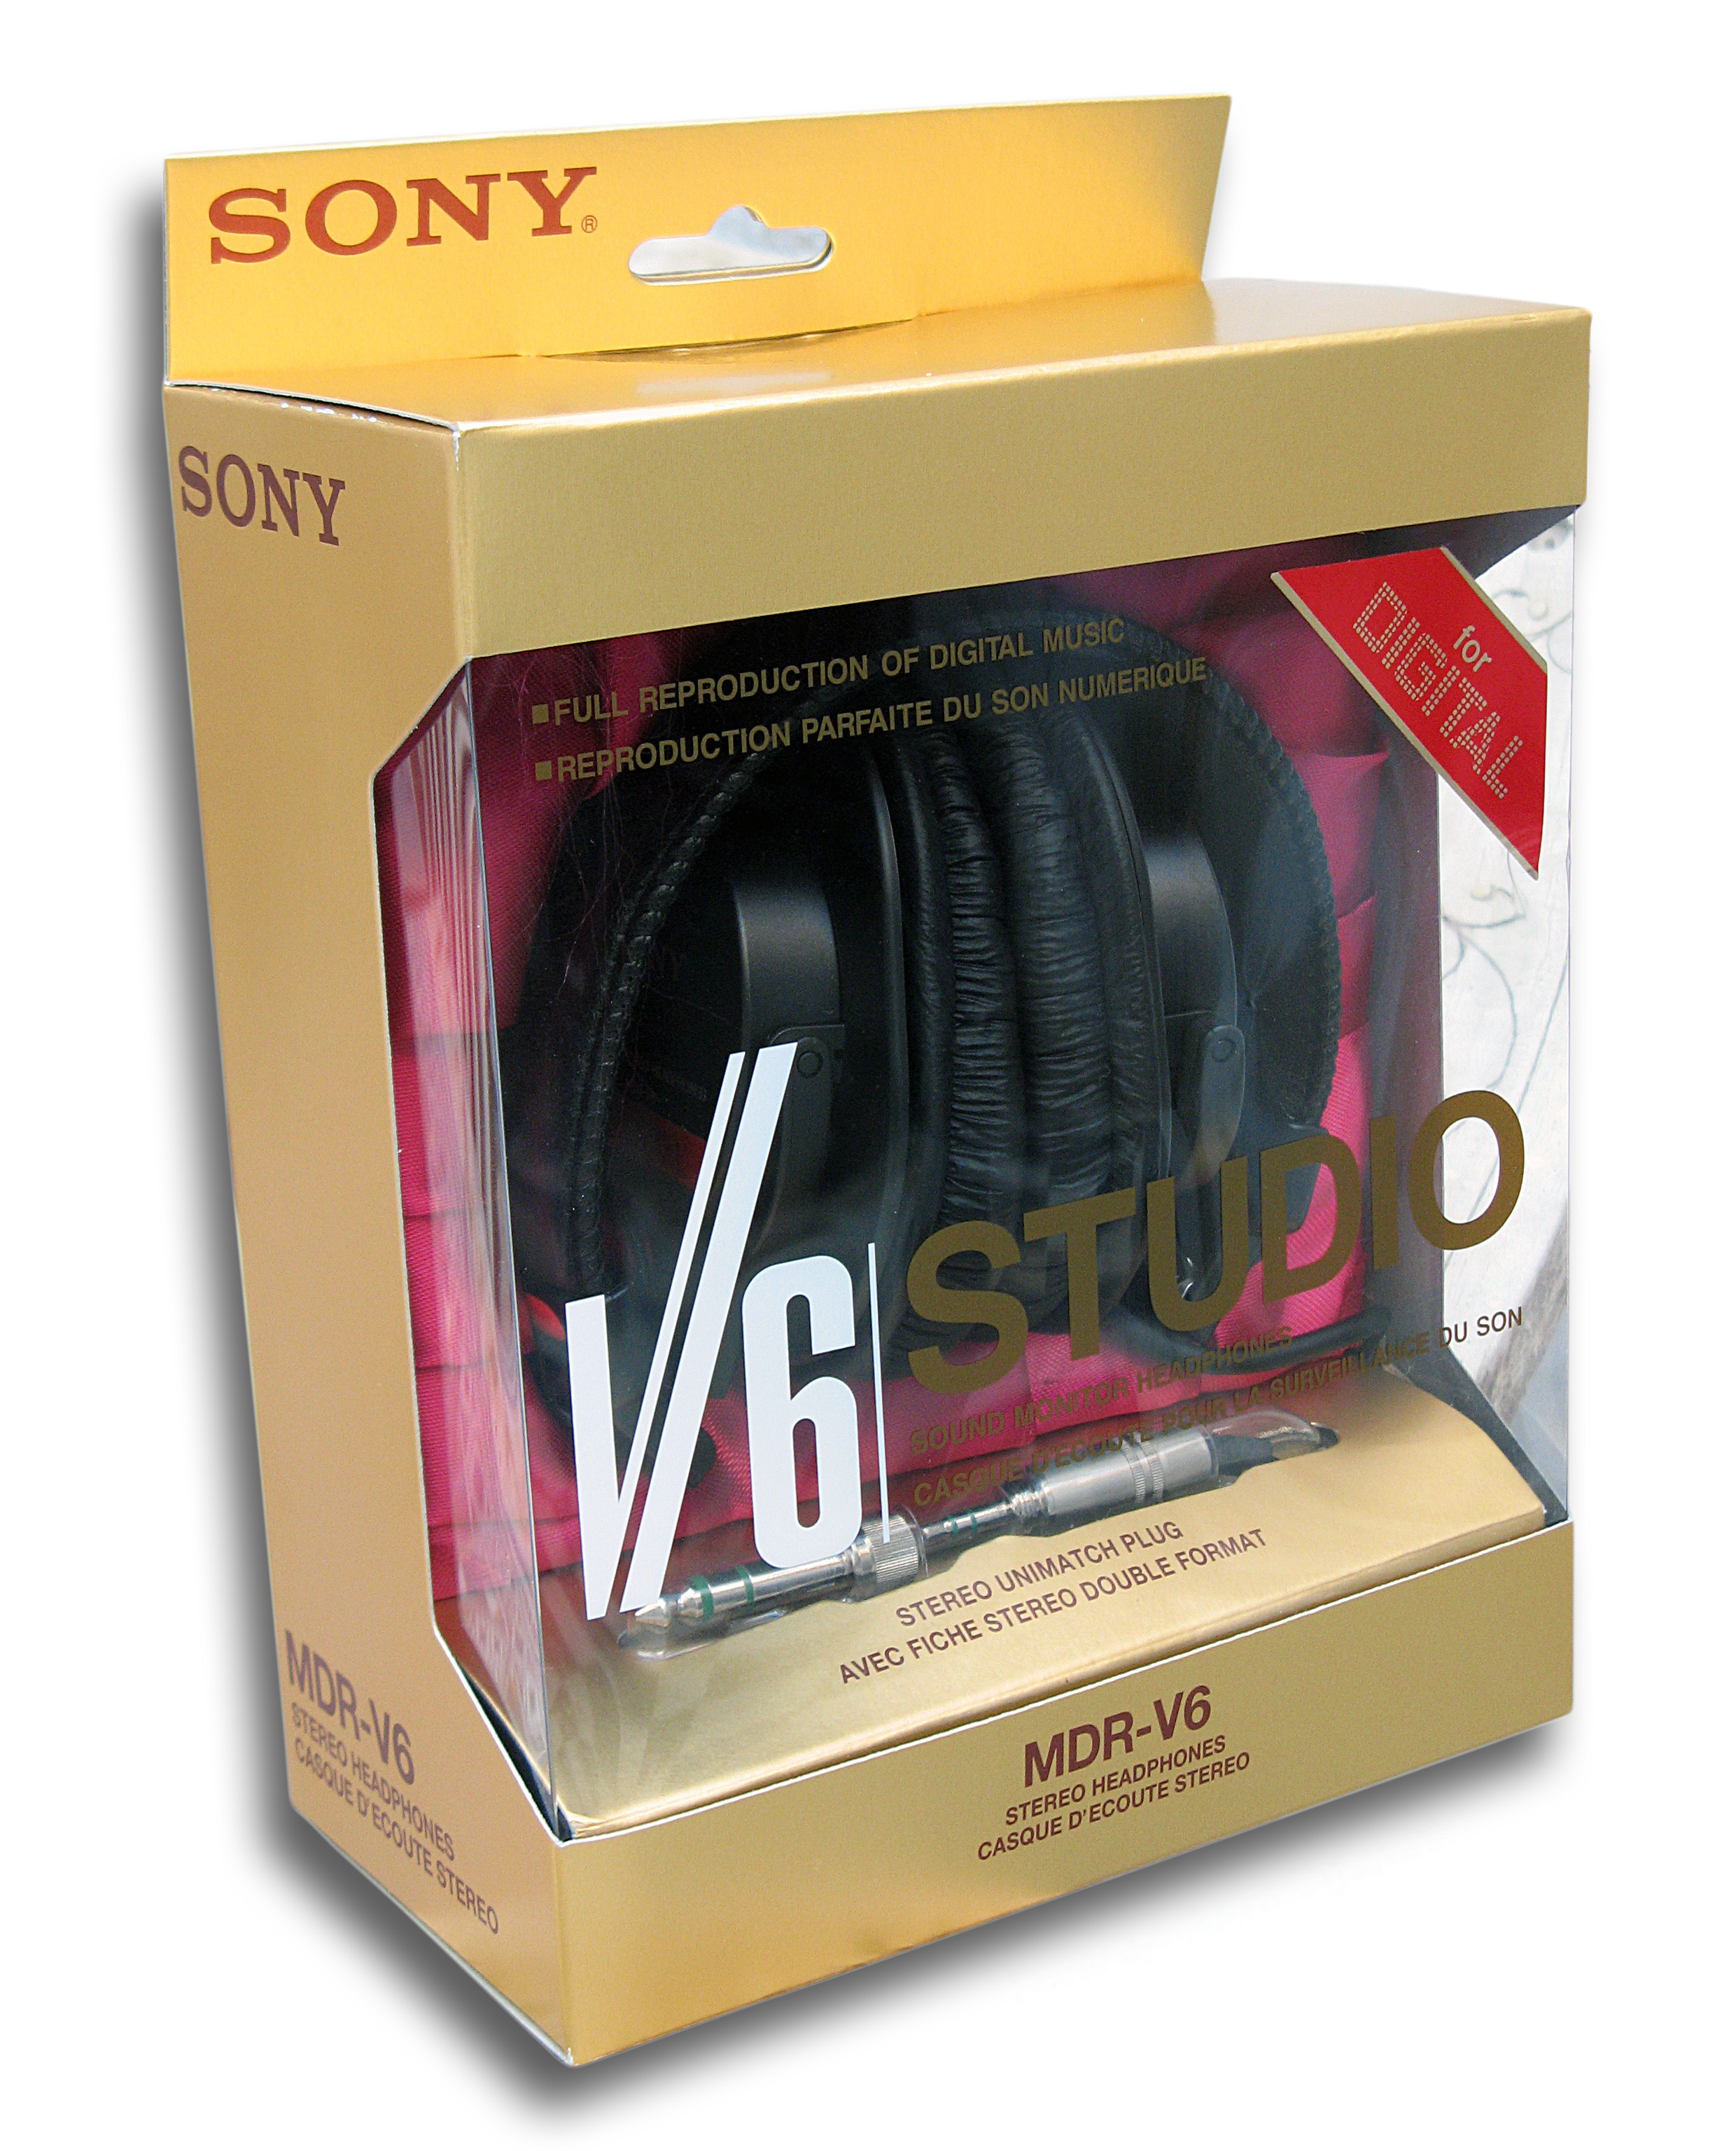 Sony MDR-V6 Headphones boxed